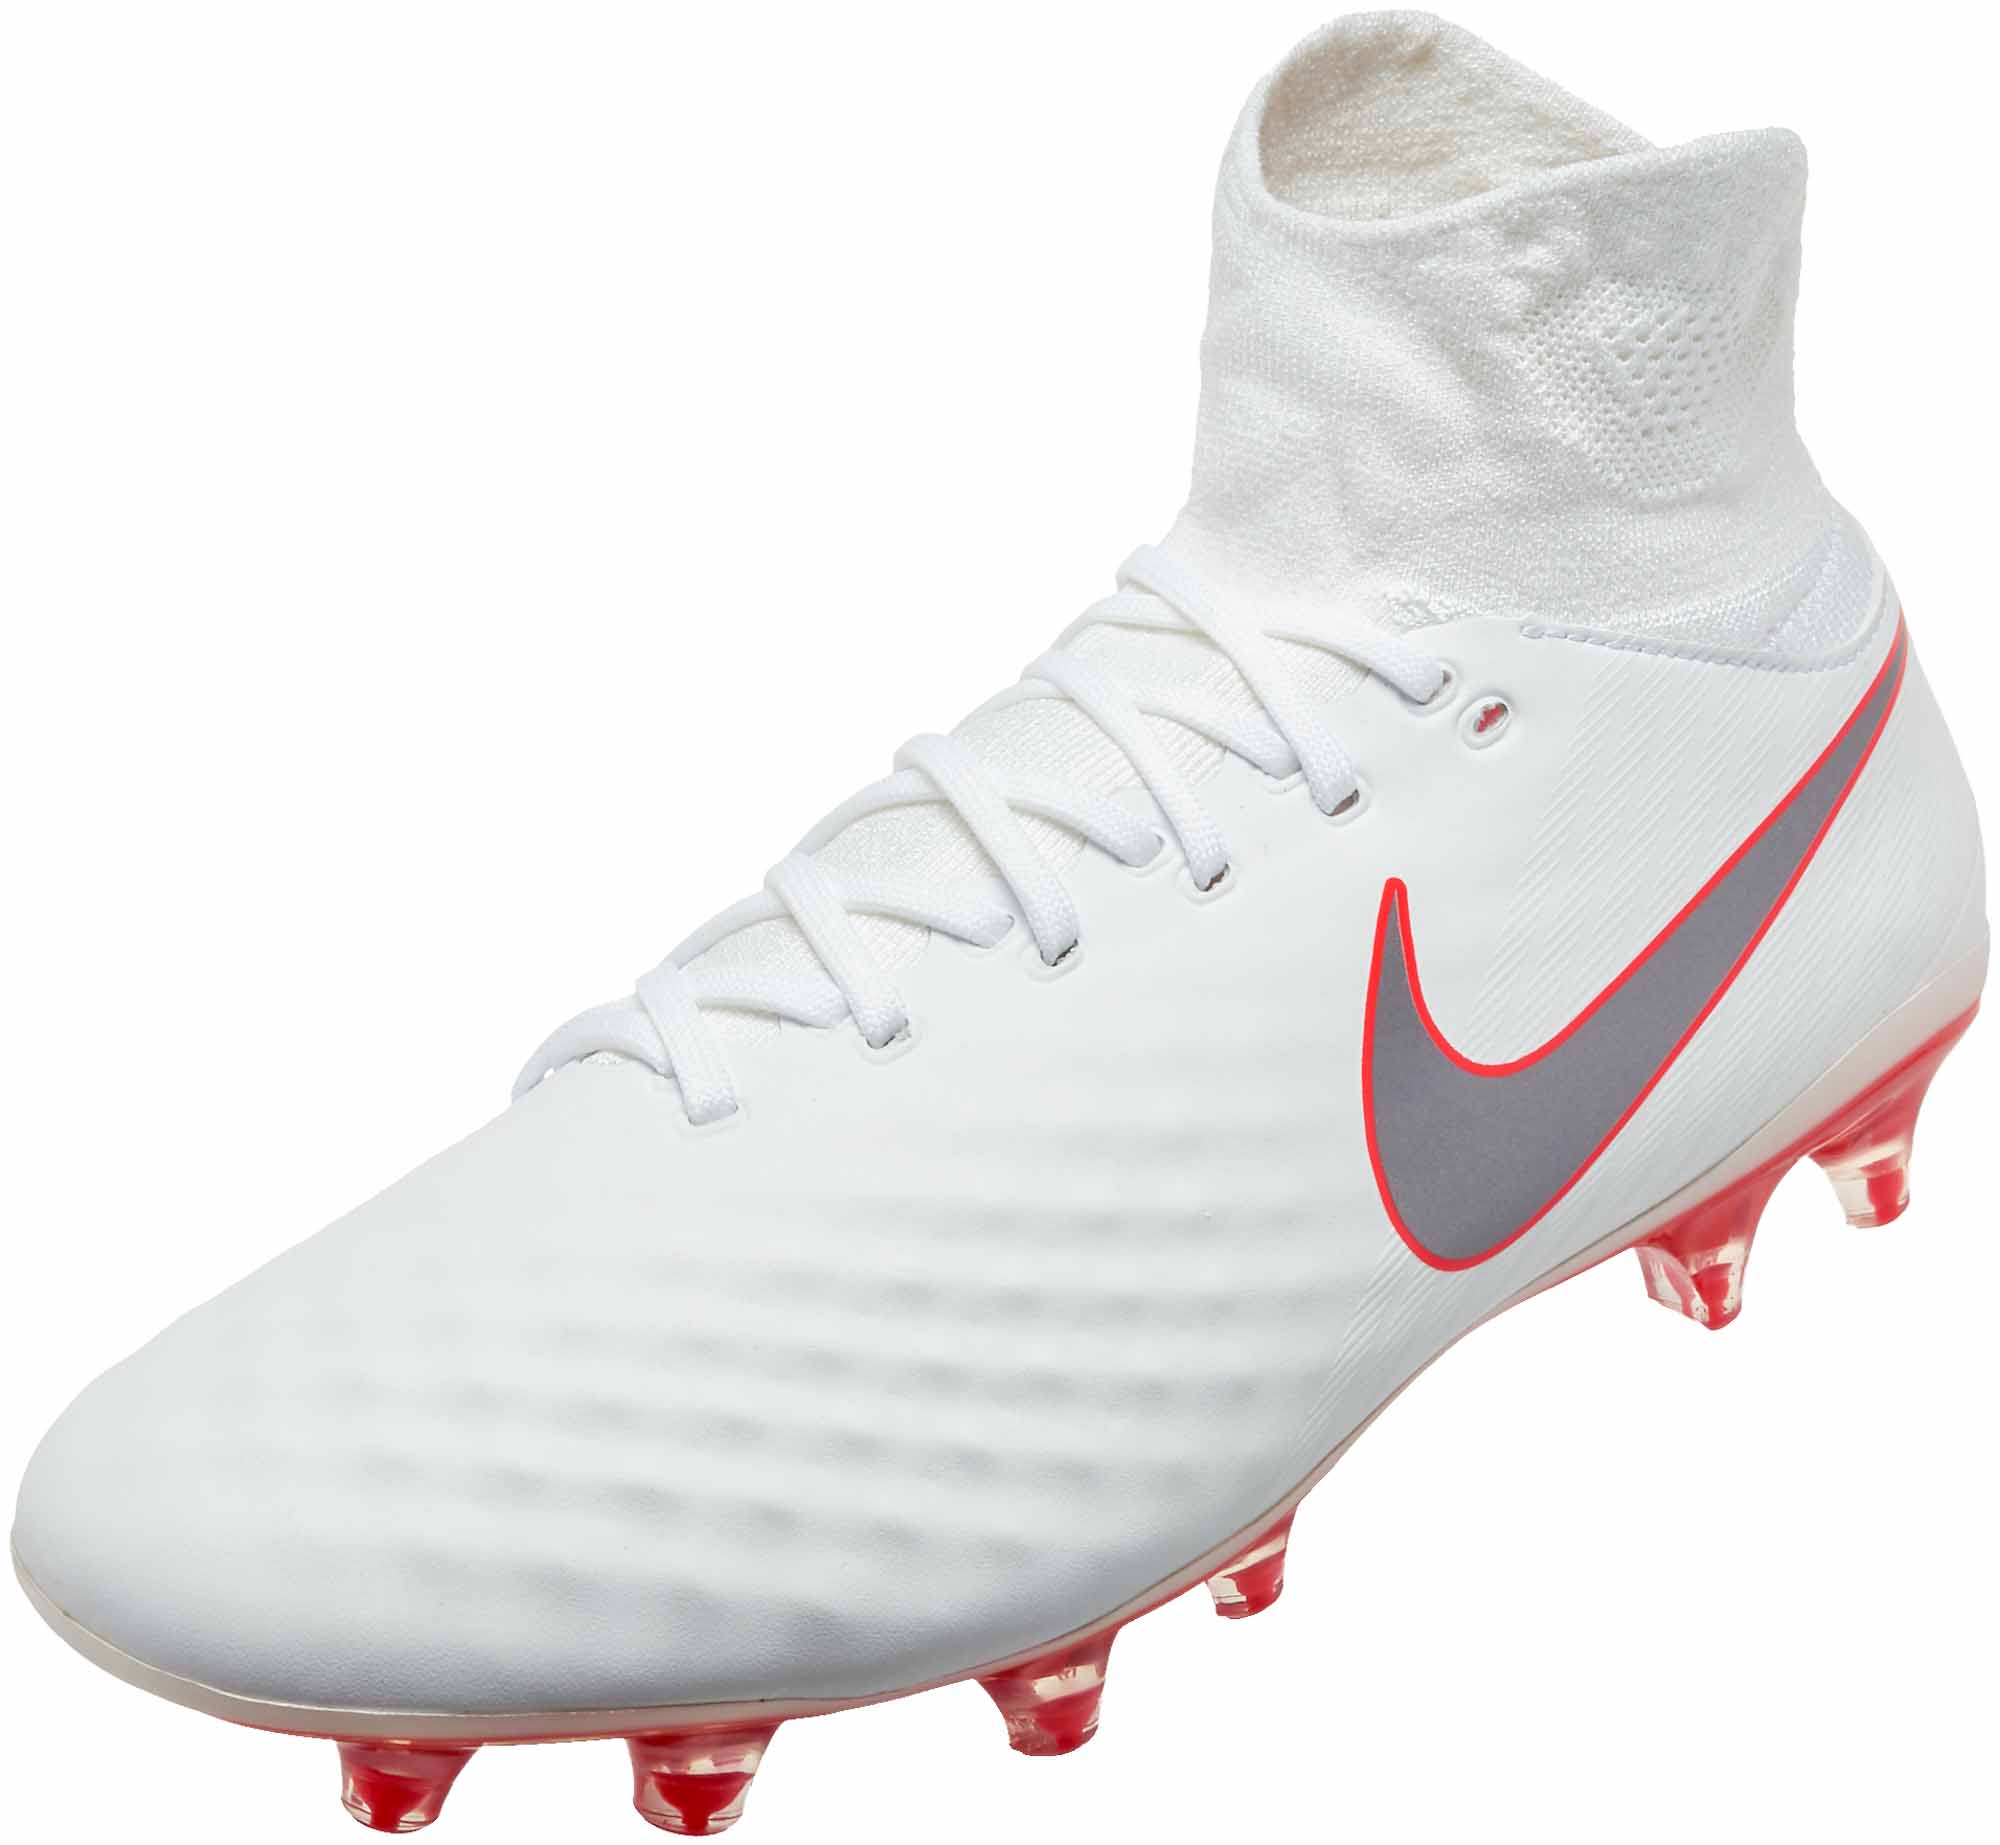 Nike Magista Obra II Pro DF FG - White/Metallic Cool Grey - SoccerPro